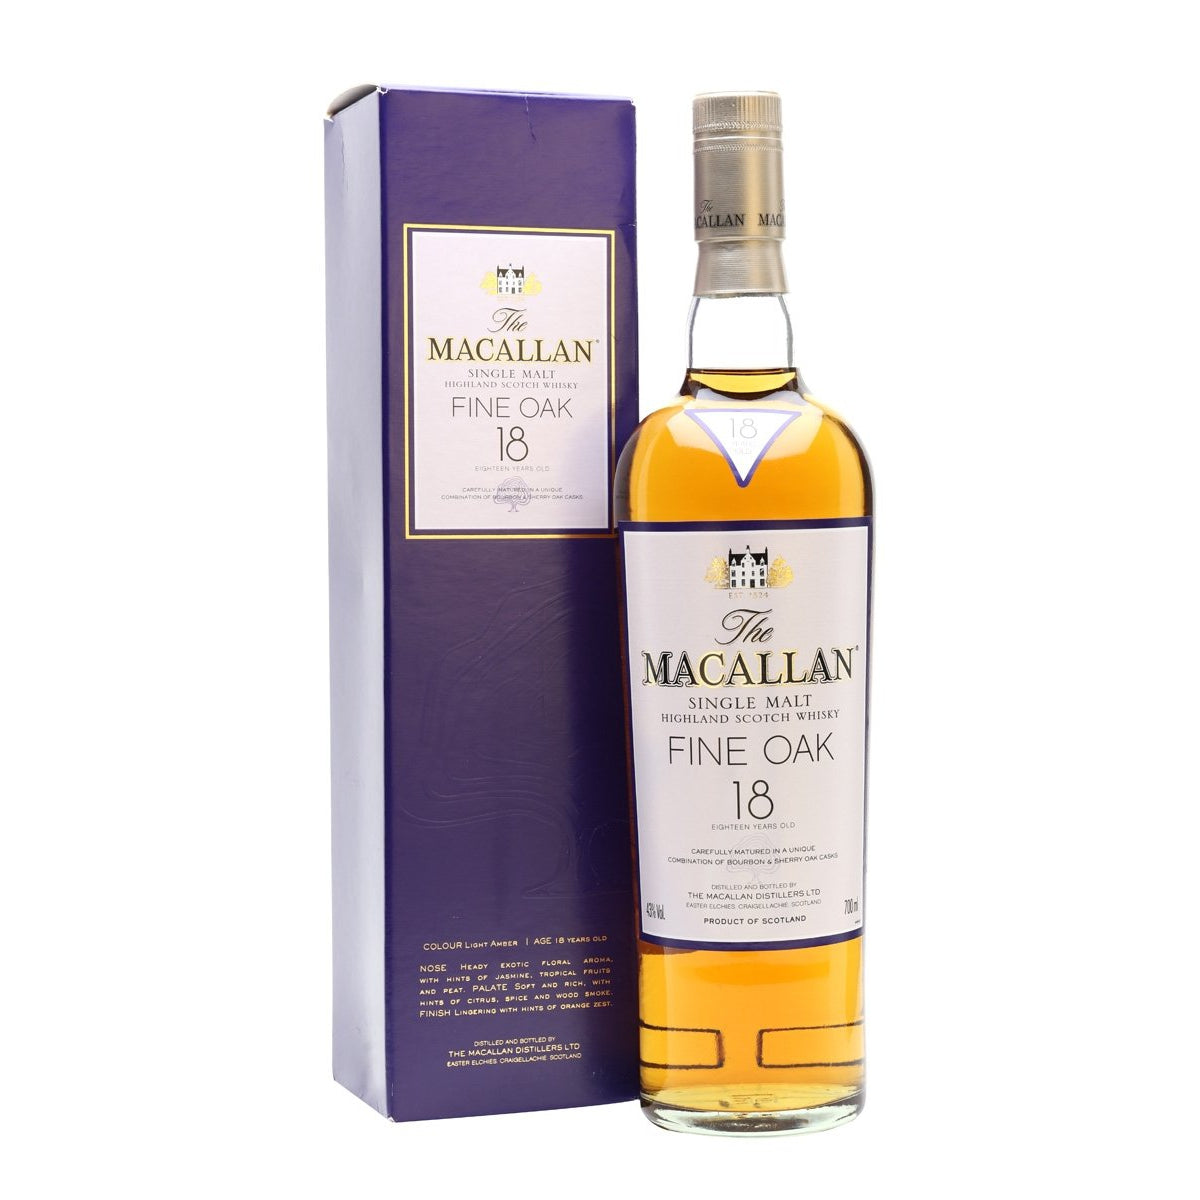 The Macallan Fine Oak Old Label 18 Year Old Single Malt Scotch Whisky 700ml